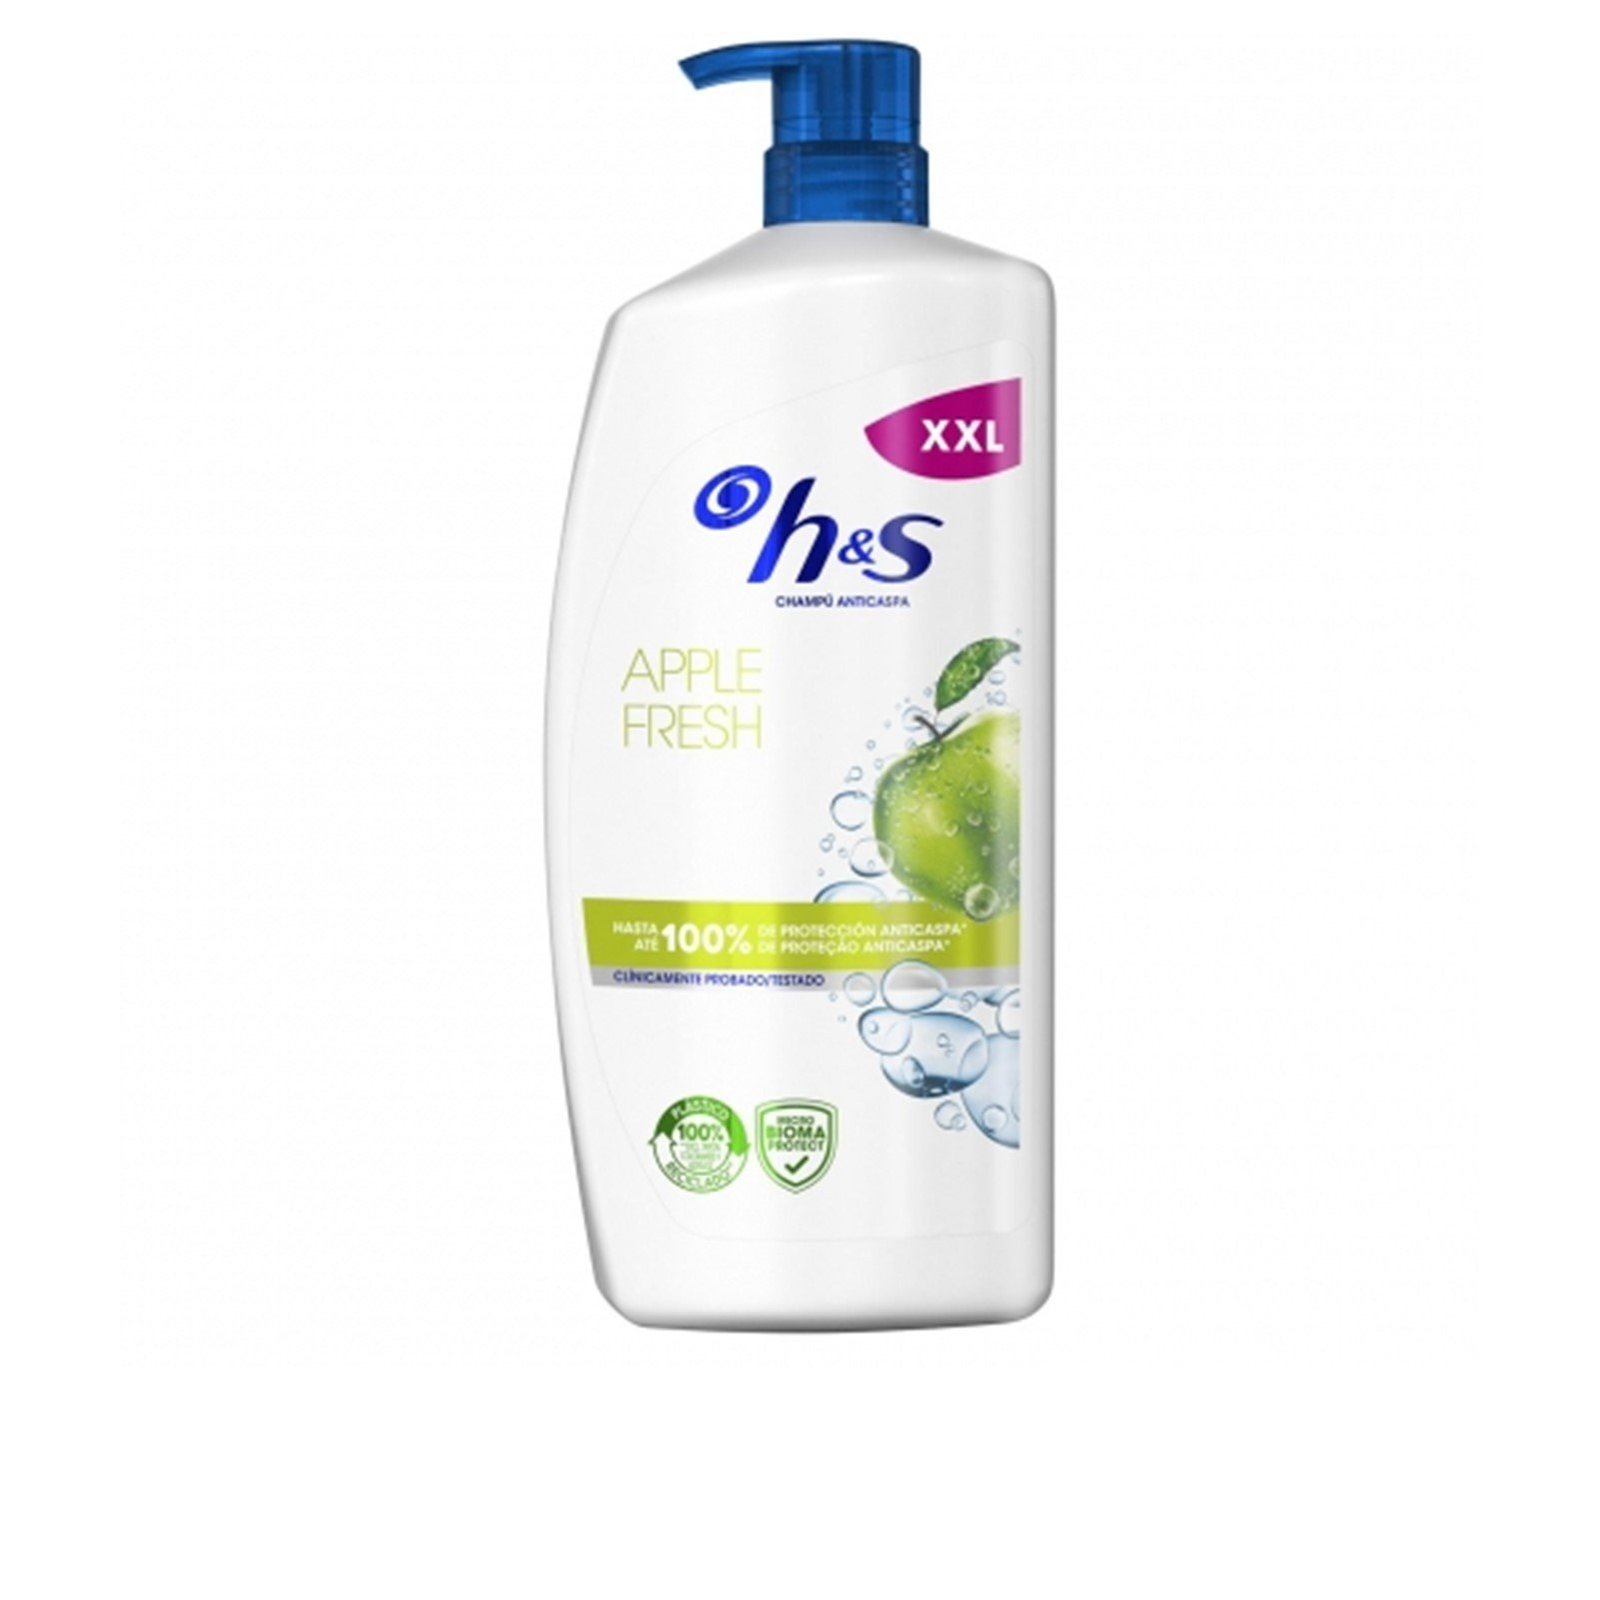 H&S Apple Fresh Shampoo 1L (33.8 fl oz)